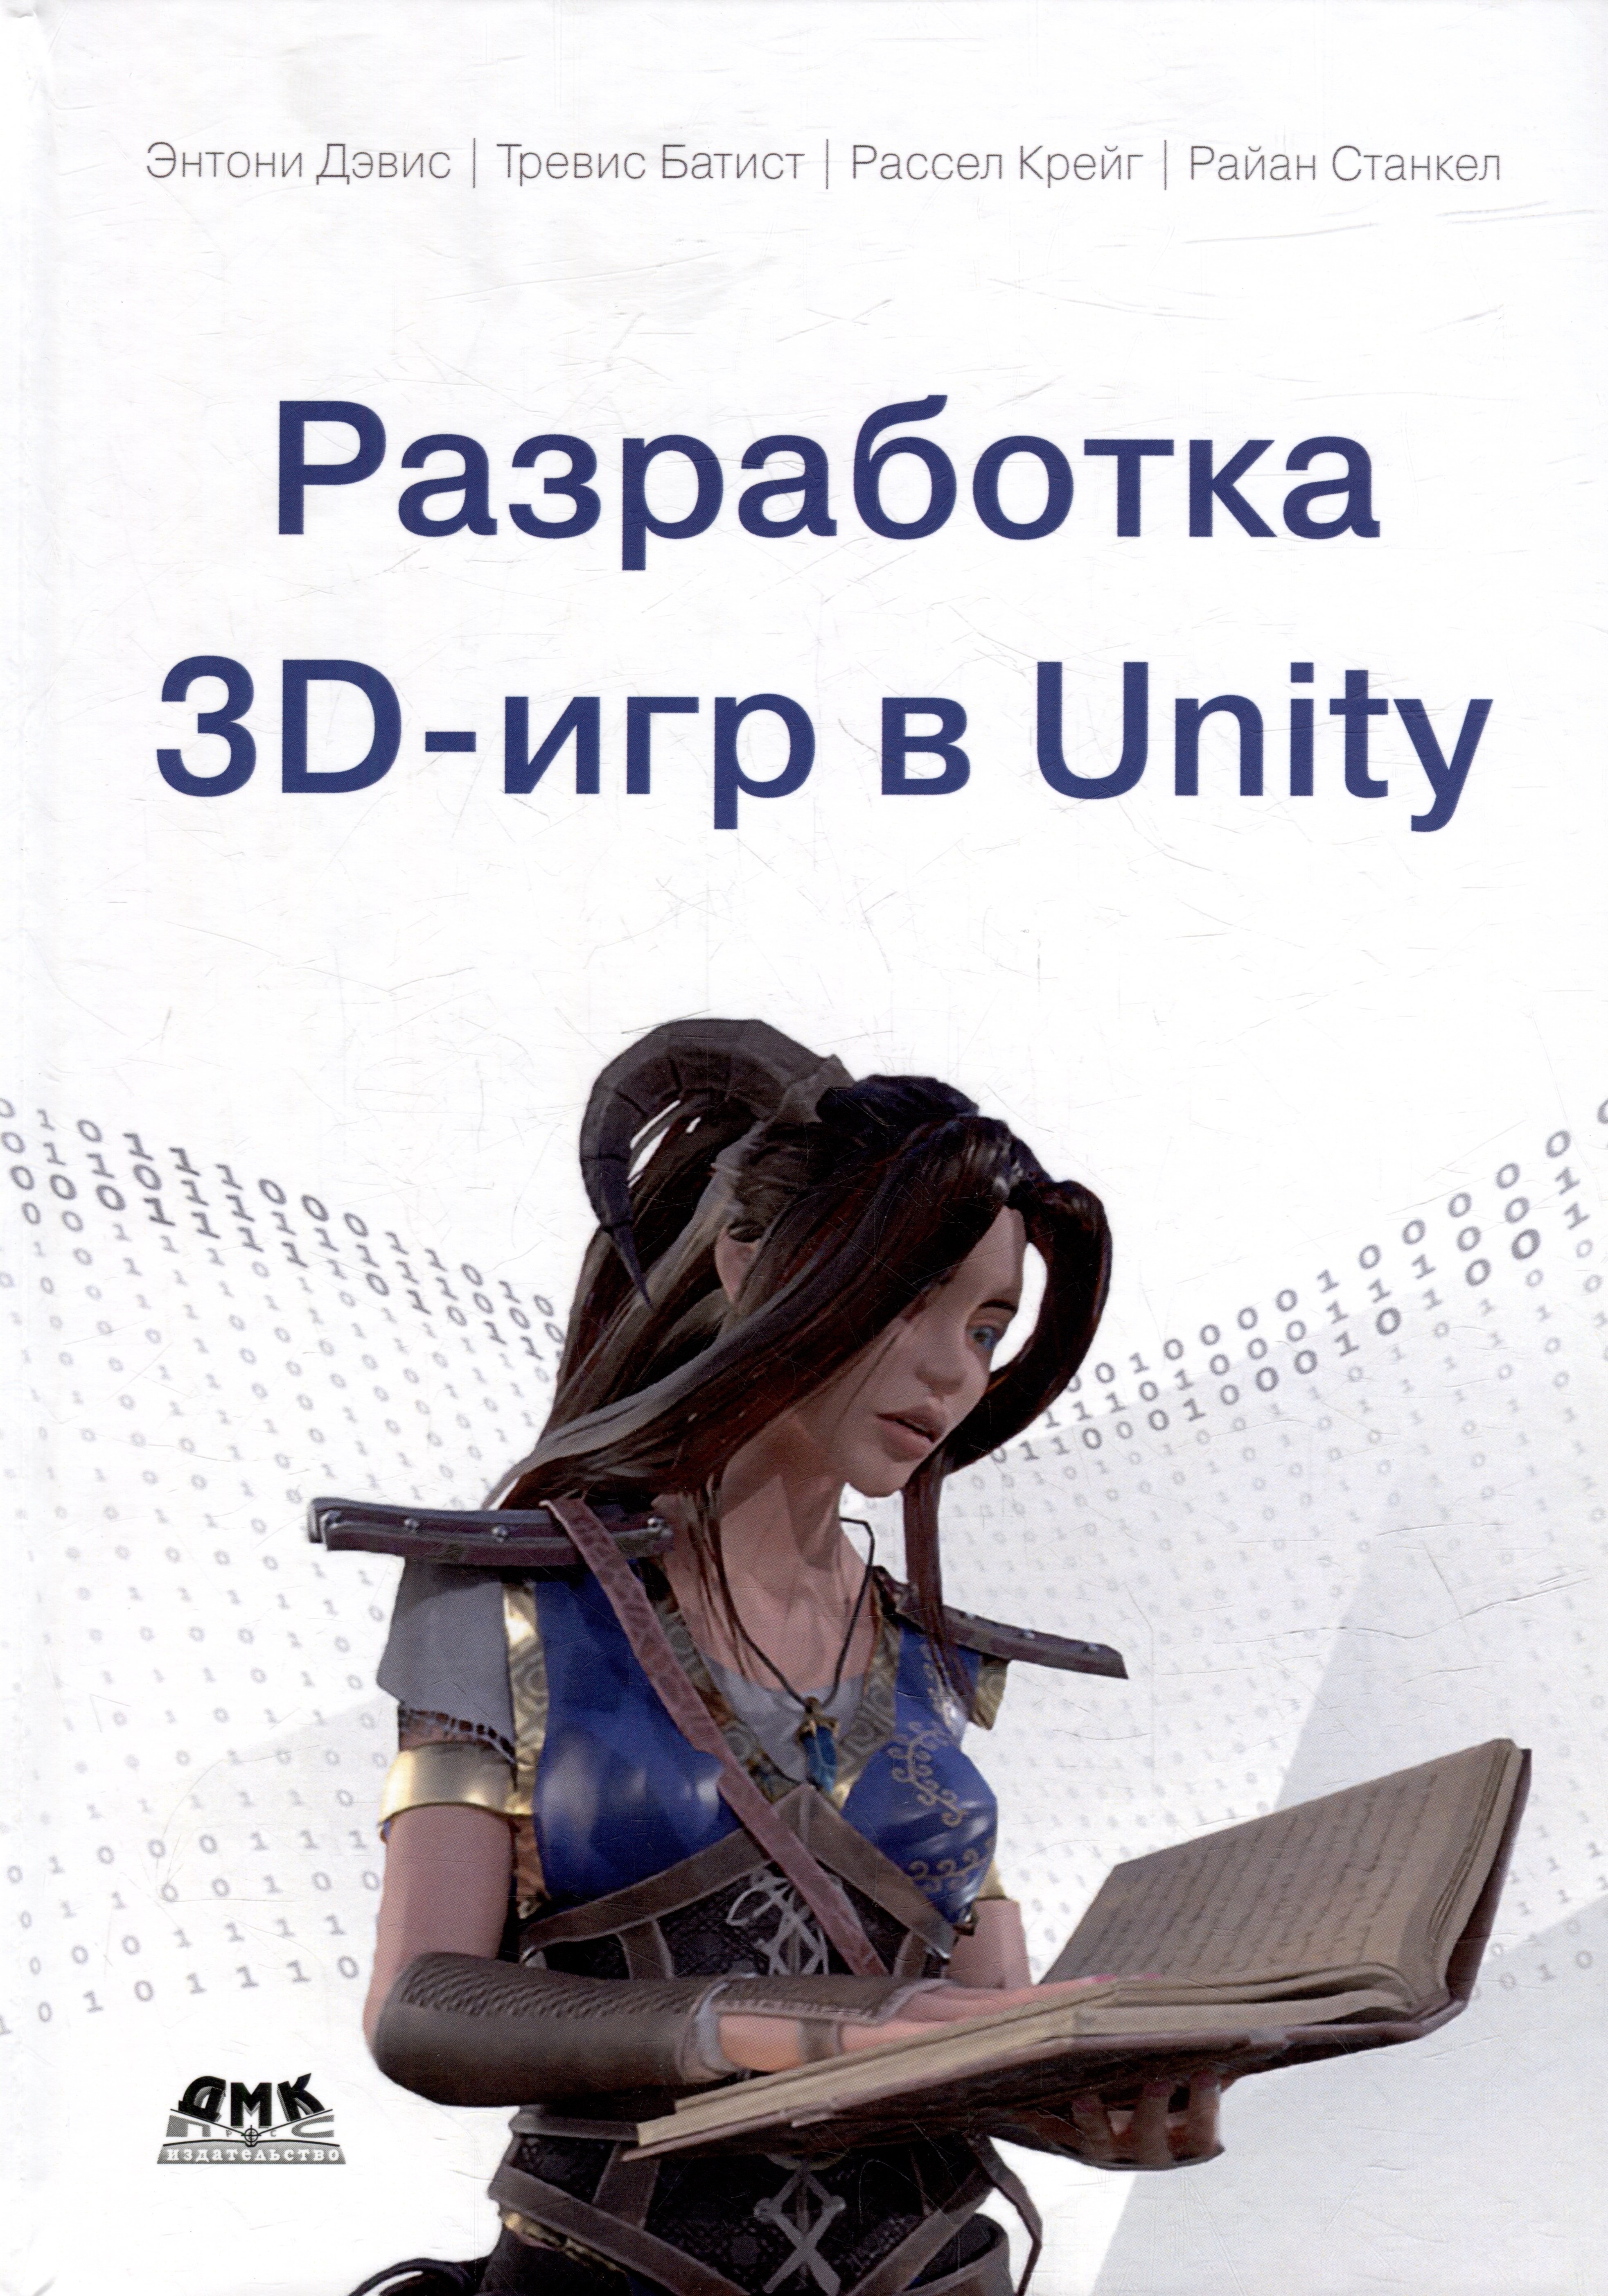  3D-  Unity